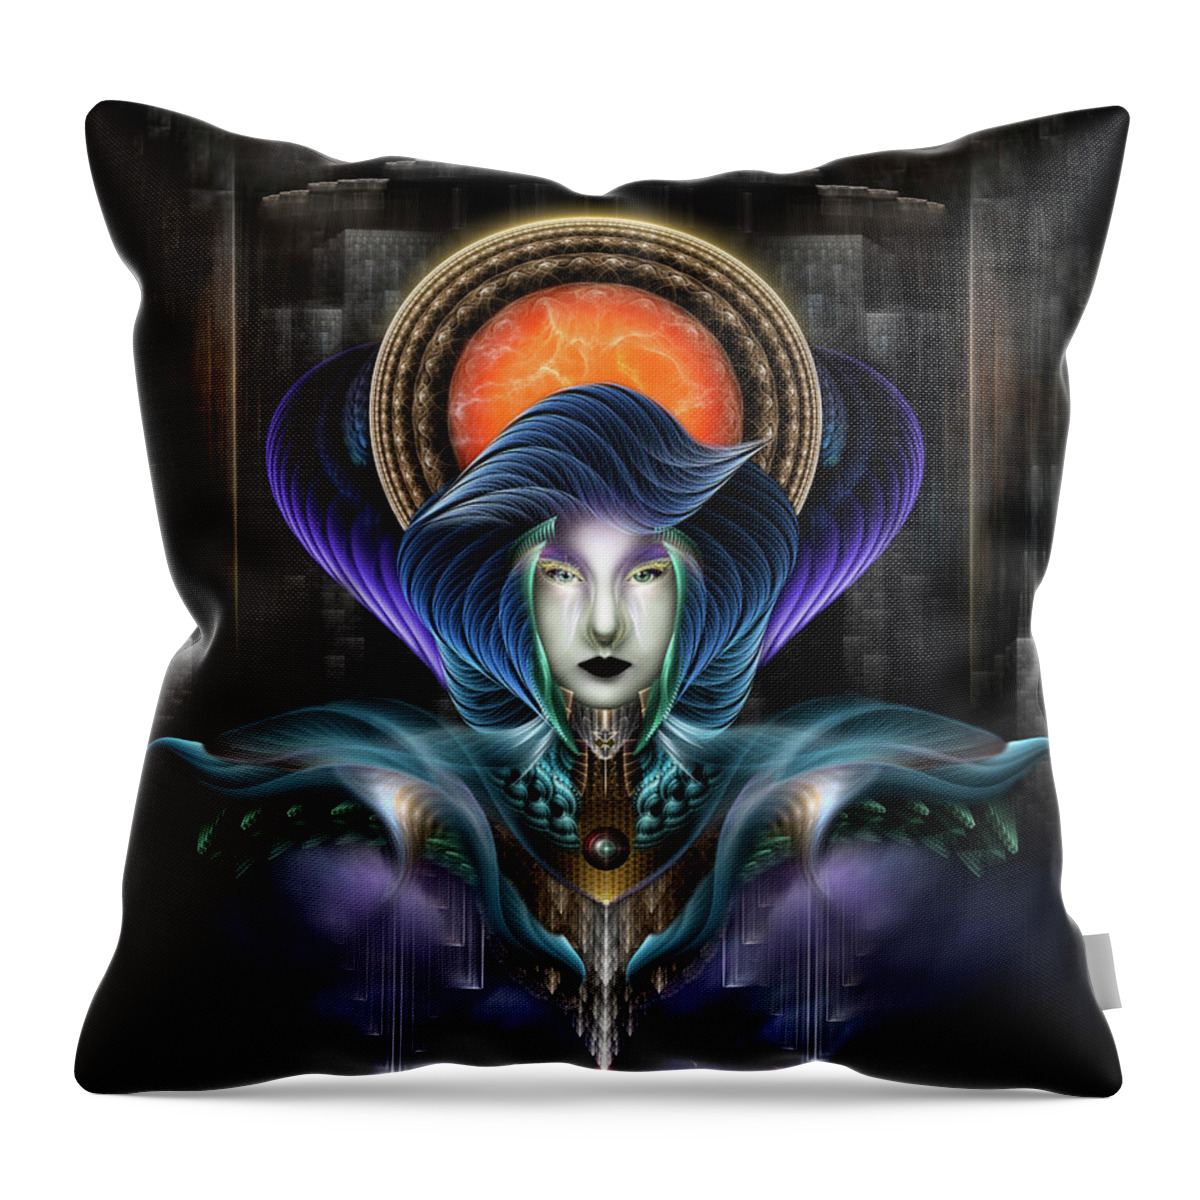 Fractal Throw Pillow featuring the digital art Trilia Goddess Of The Orange Moon by Rolando Burbon